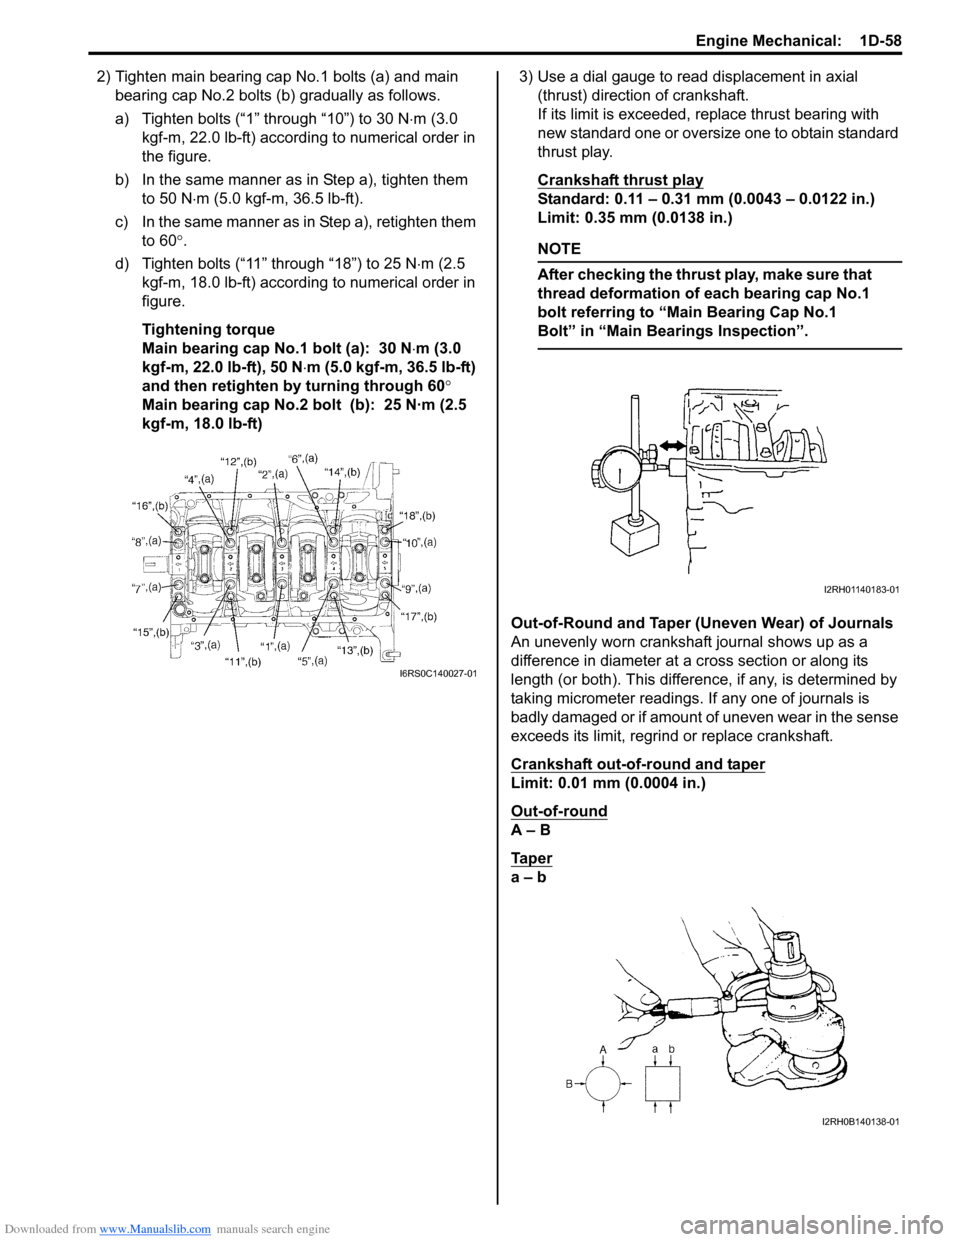 SUZUKI SWIFT 2005 2.G Service Workshop Manual Downloaded from www.Manualslib.com manuals search engine Engine Mechanical:  1D-58
2) Tighten main bearing cap No.1 bolts (a) and main bearing cap No.2 bolts (b ) gradually as follows.
a) Tighten bolt